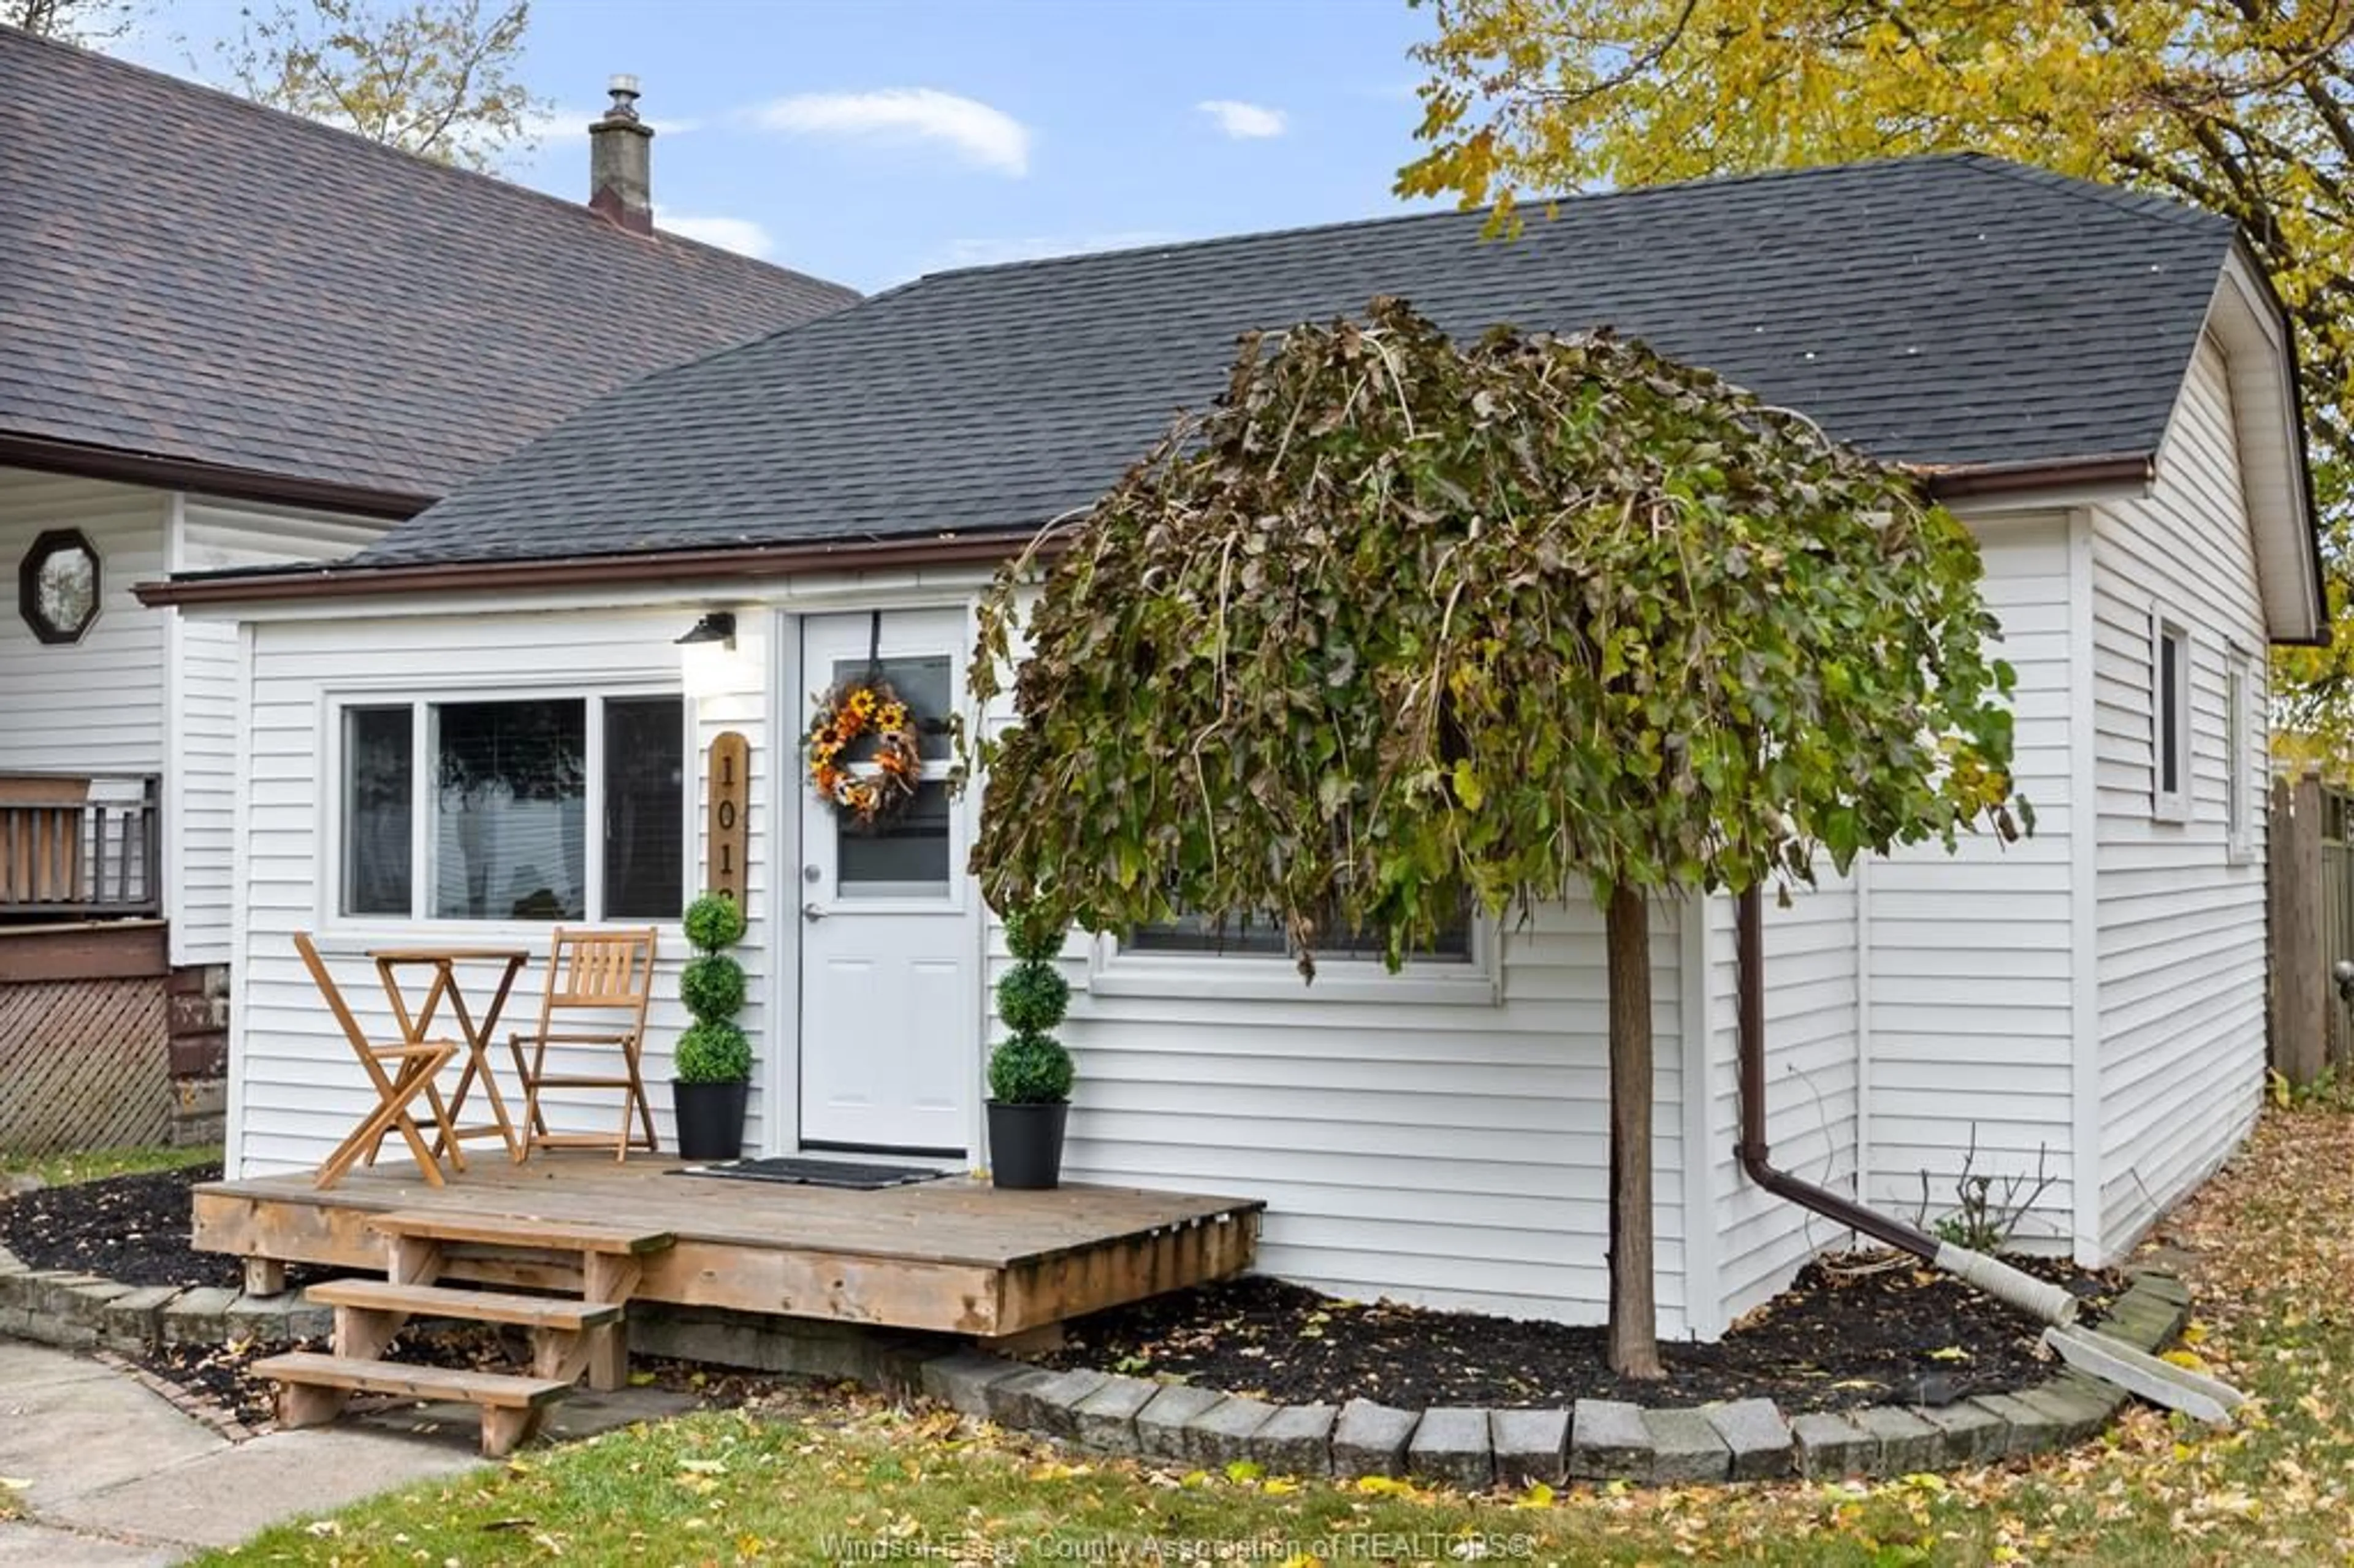 Home with vinyl exterior material for 1013 ST PIERRE, Tecumseh Ontario N8N 1Z7